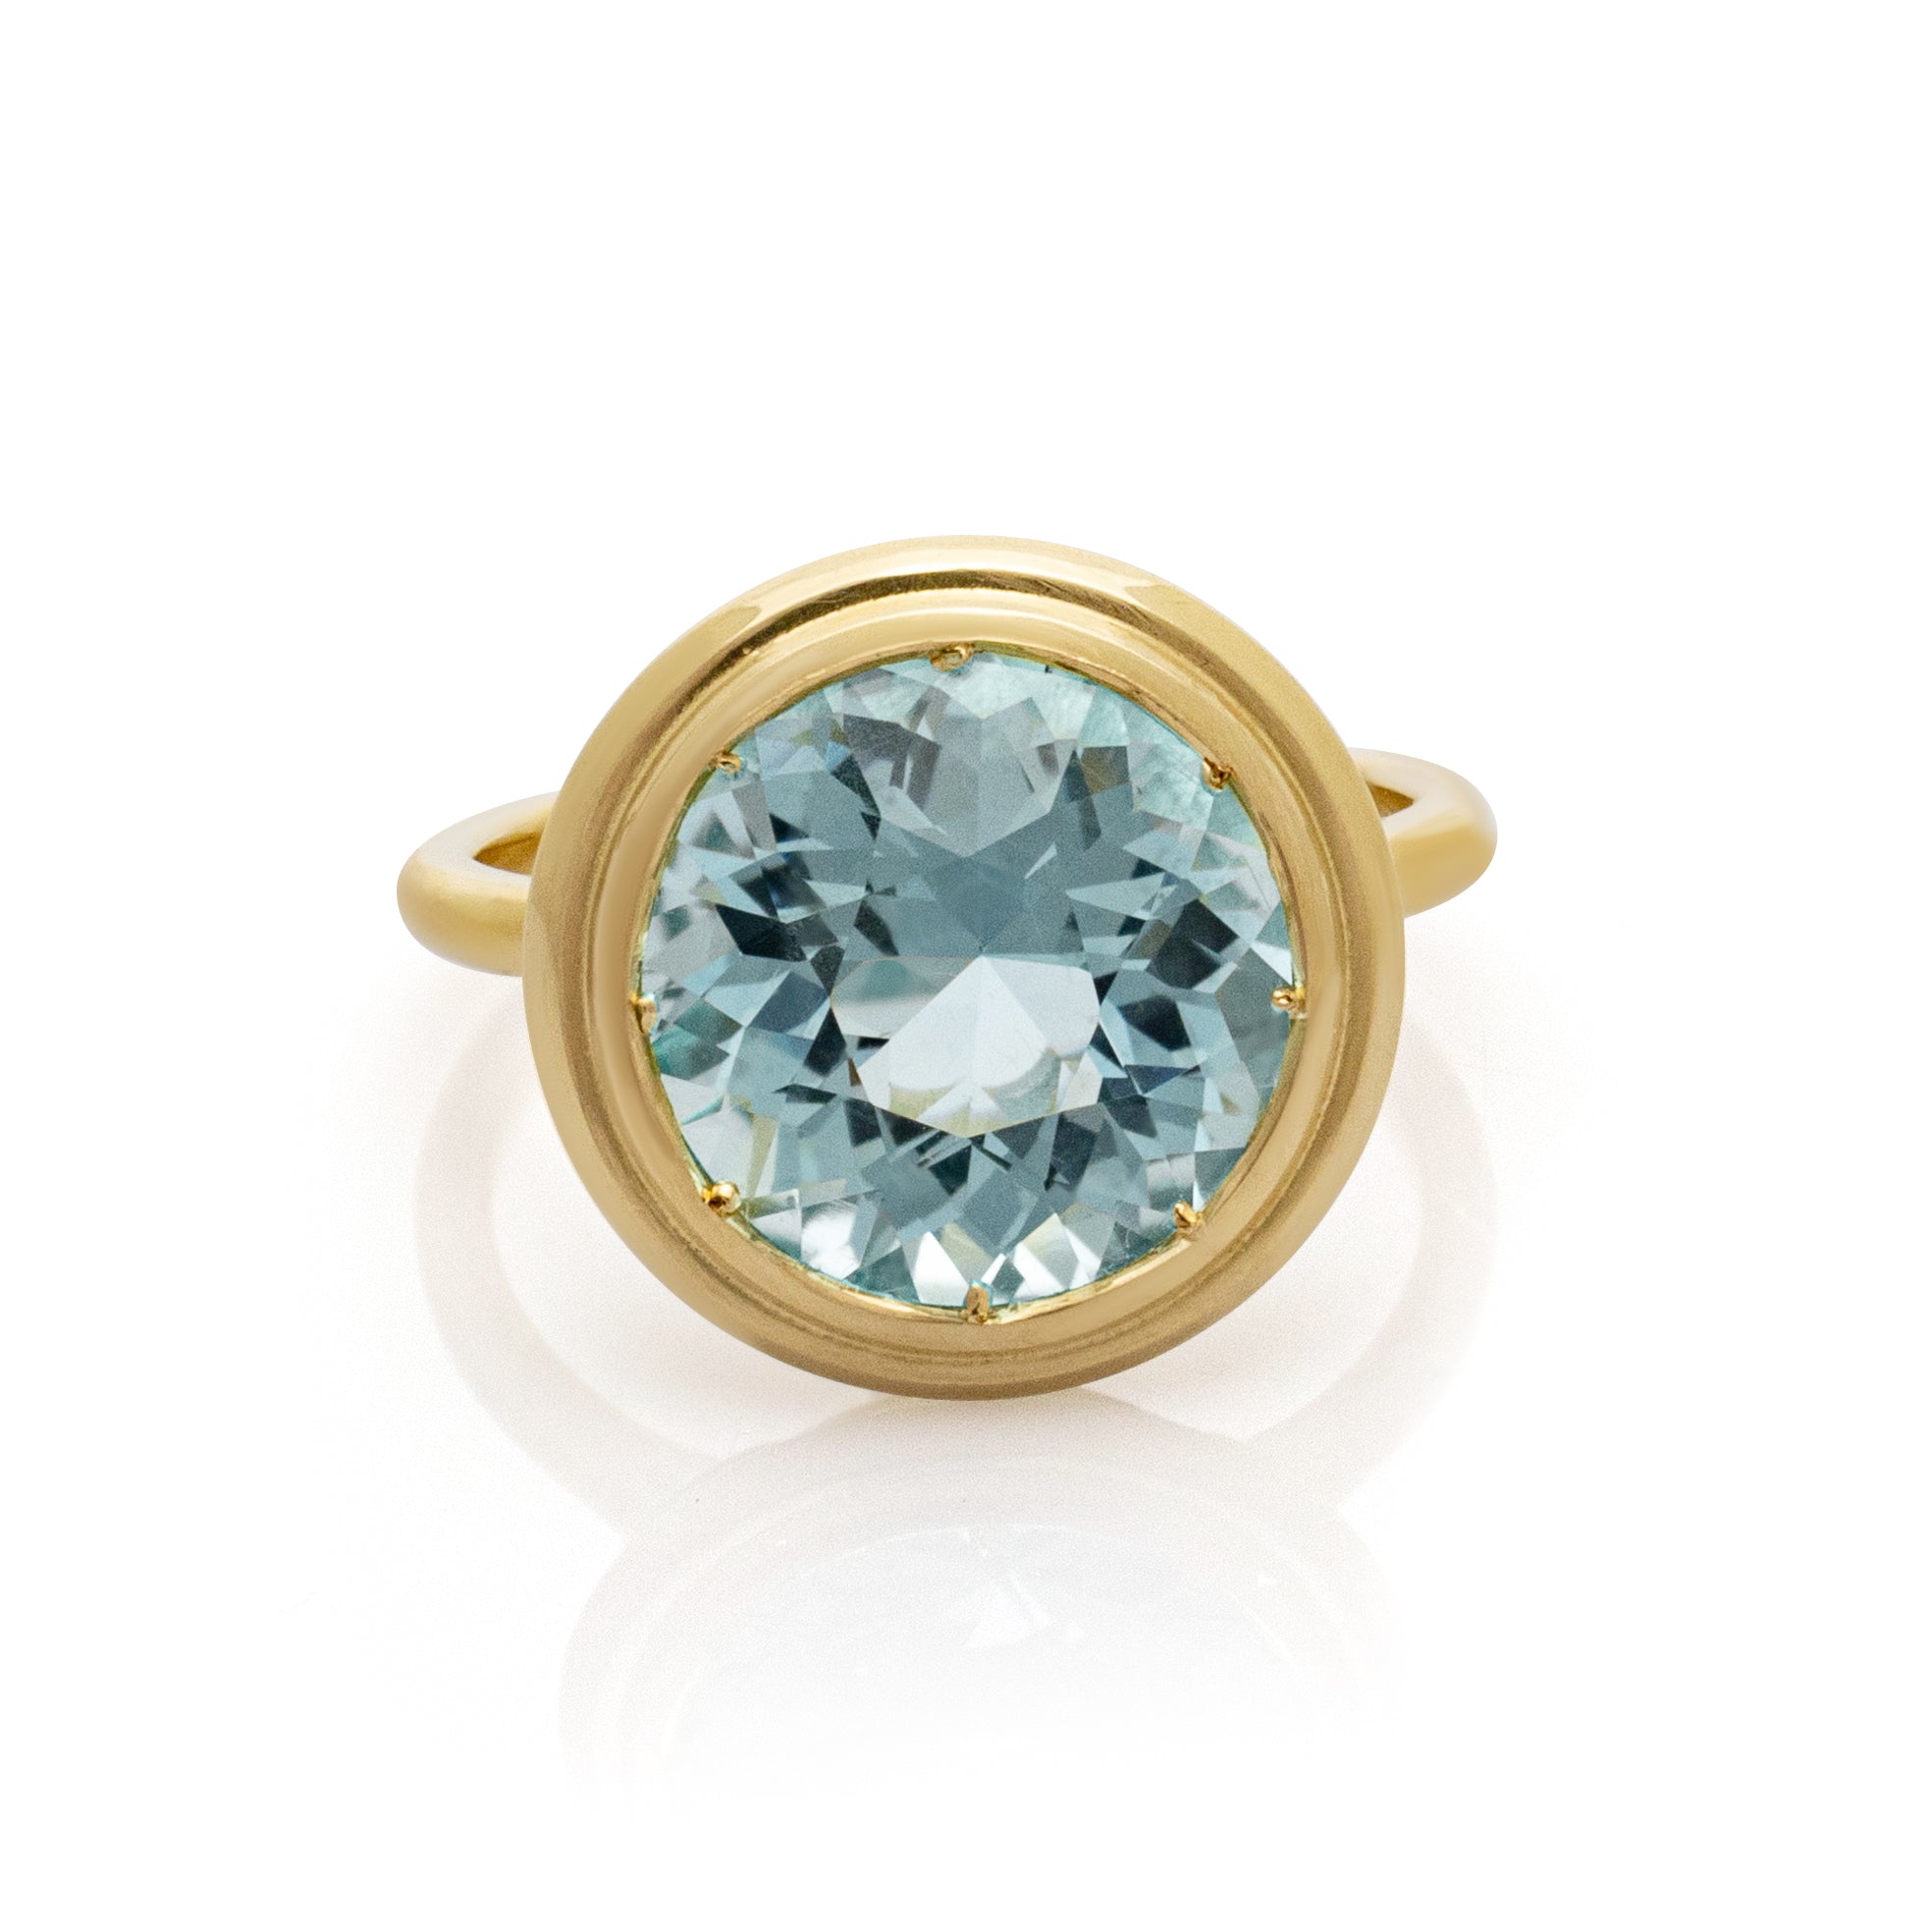 Aquamarine cocktail ring. Serena Ansell Bespoke Jewellery. Bespoke Jewellery Designer London. 